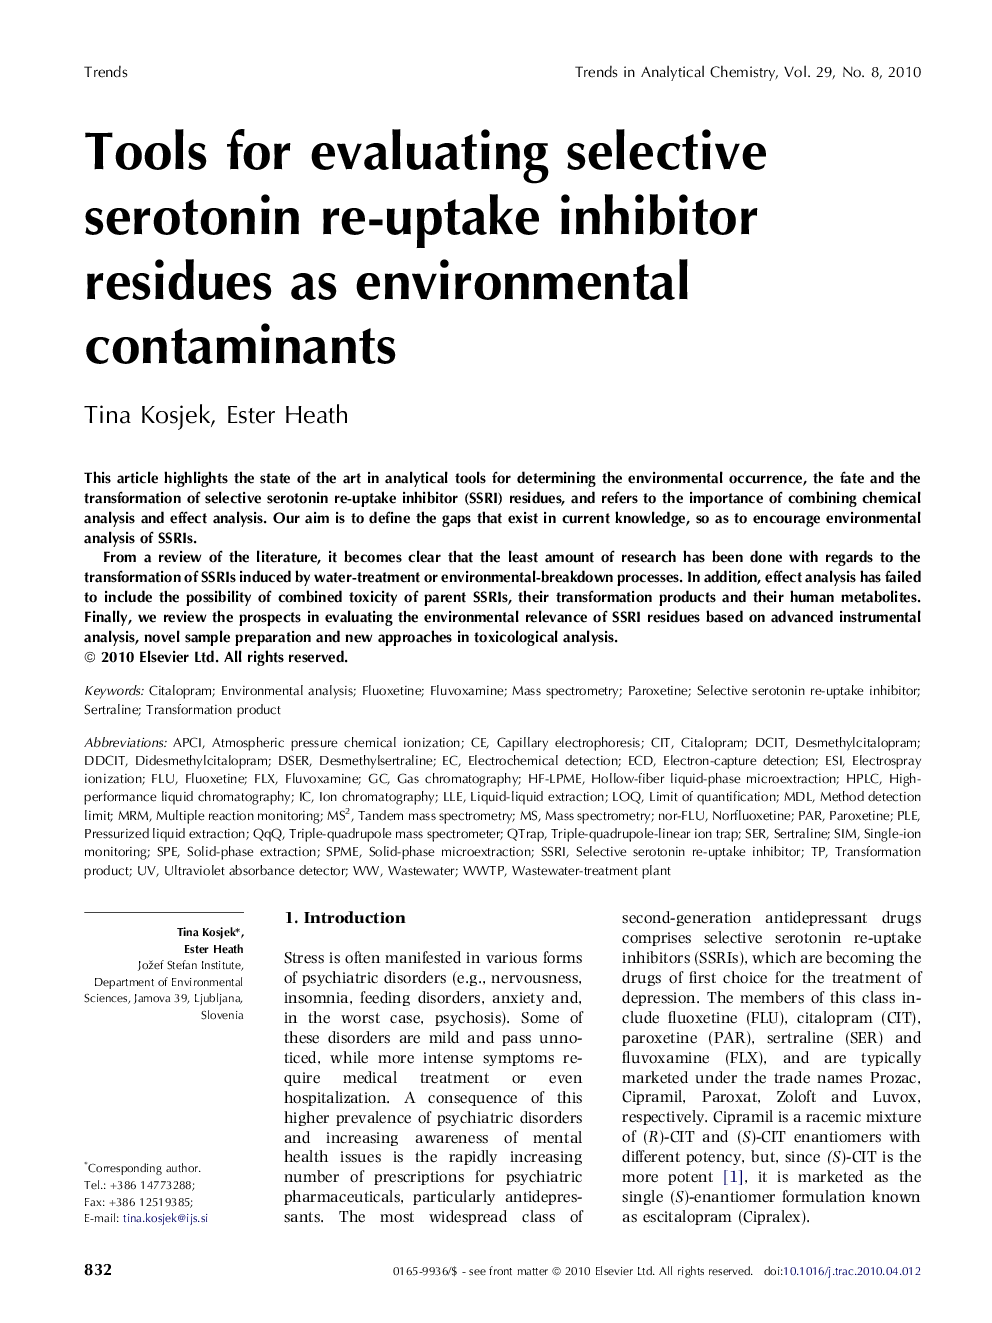 Tools for evaluating selective serotonin re-uptake inhibitor residues as environmental contaminants